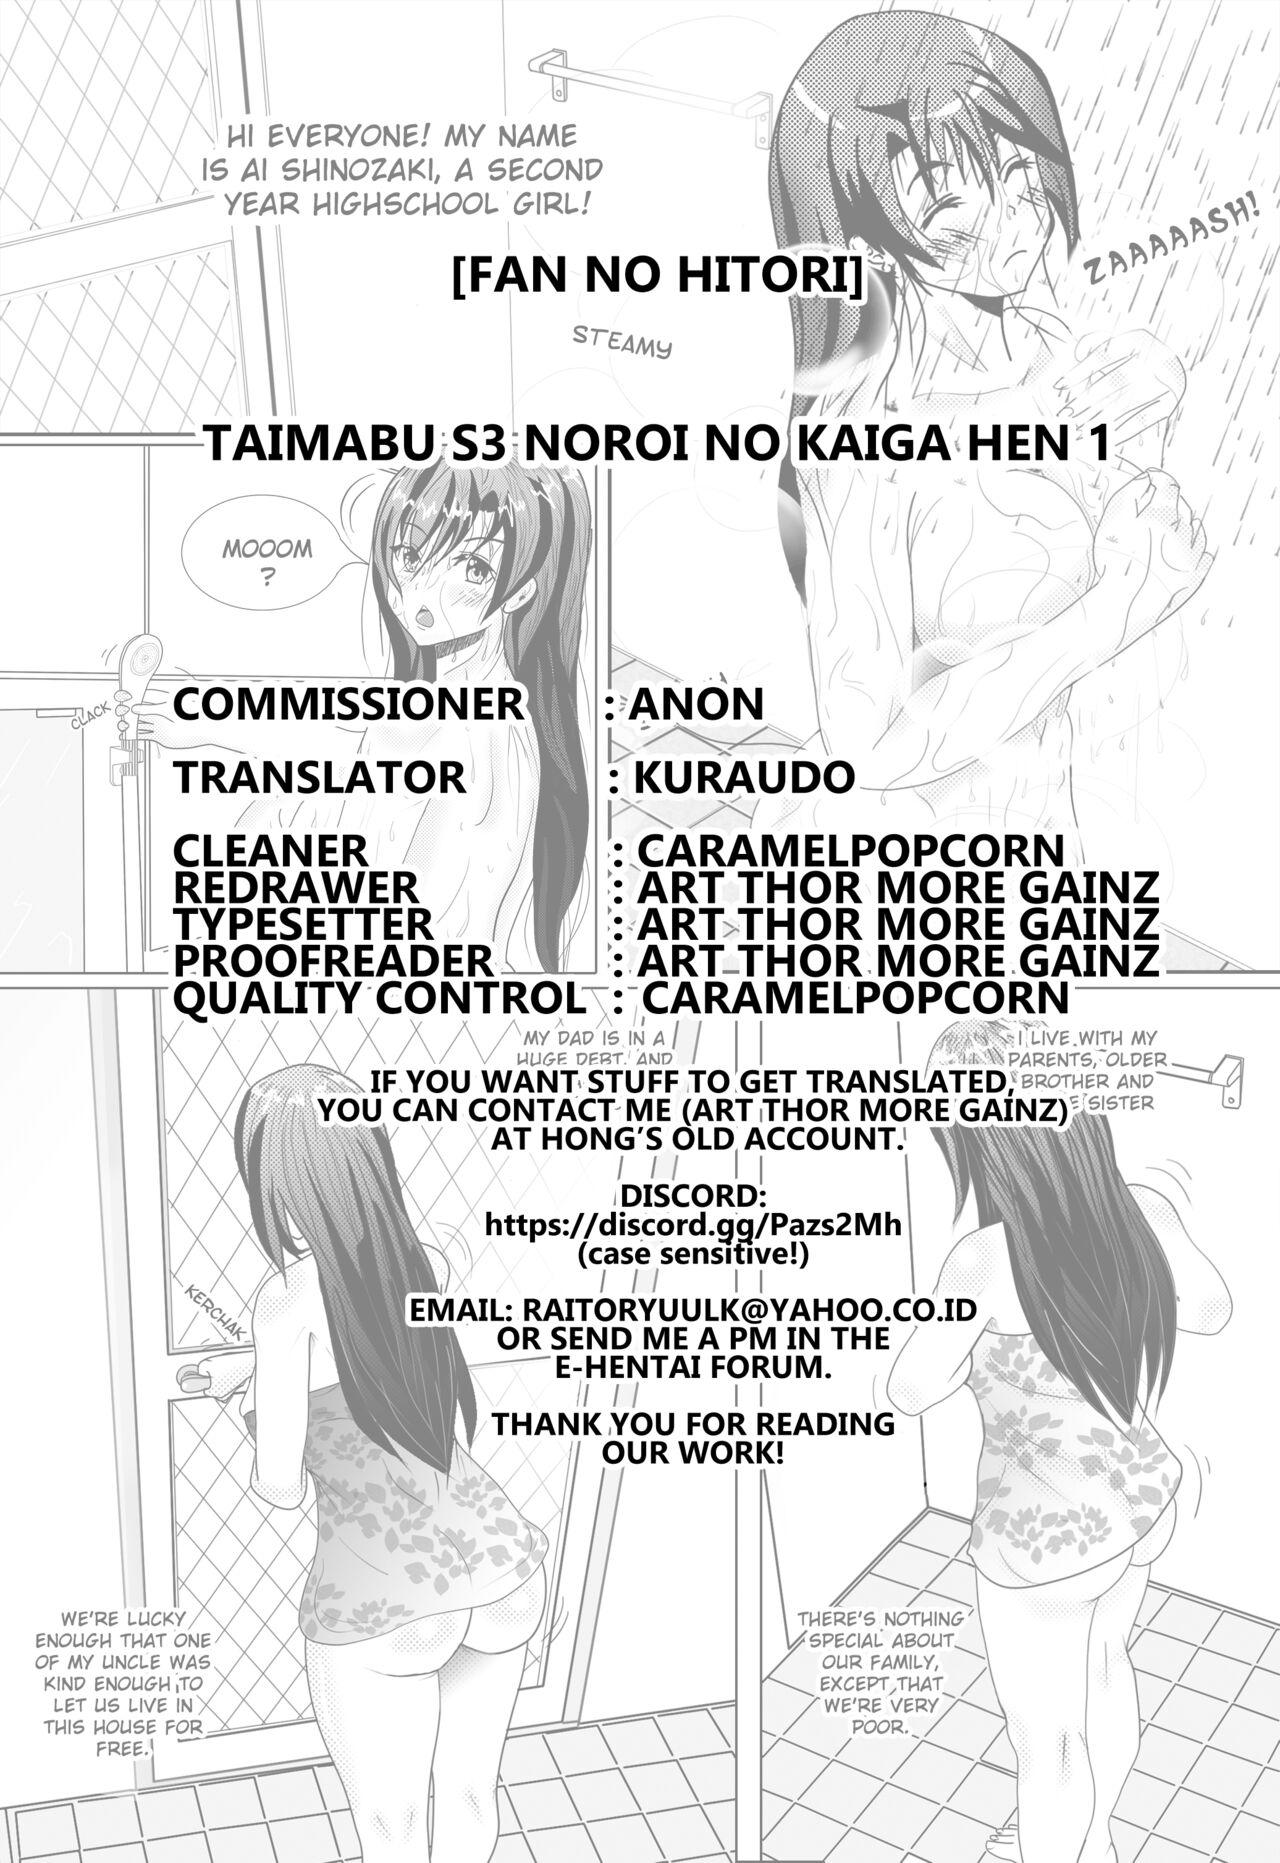 Taimabu S3 Noroi no Kaiga Hen 1 | Taimabu The Cursed Paintings Chapter 1 12